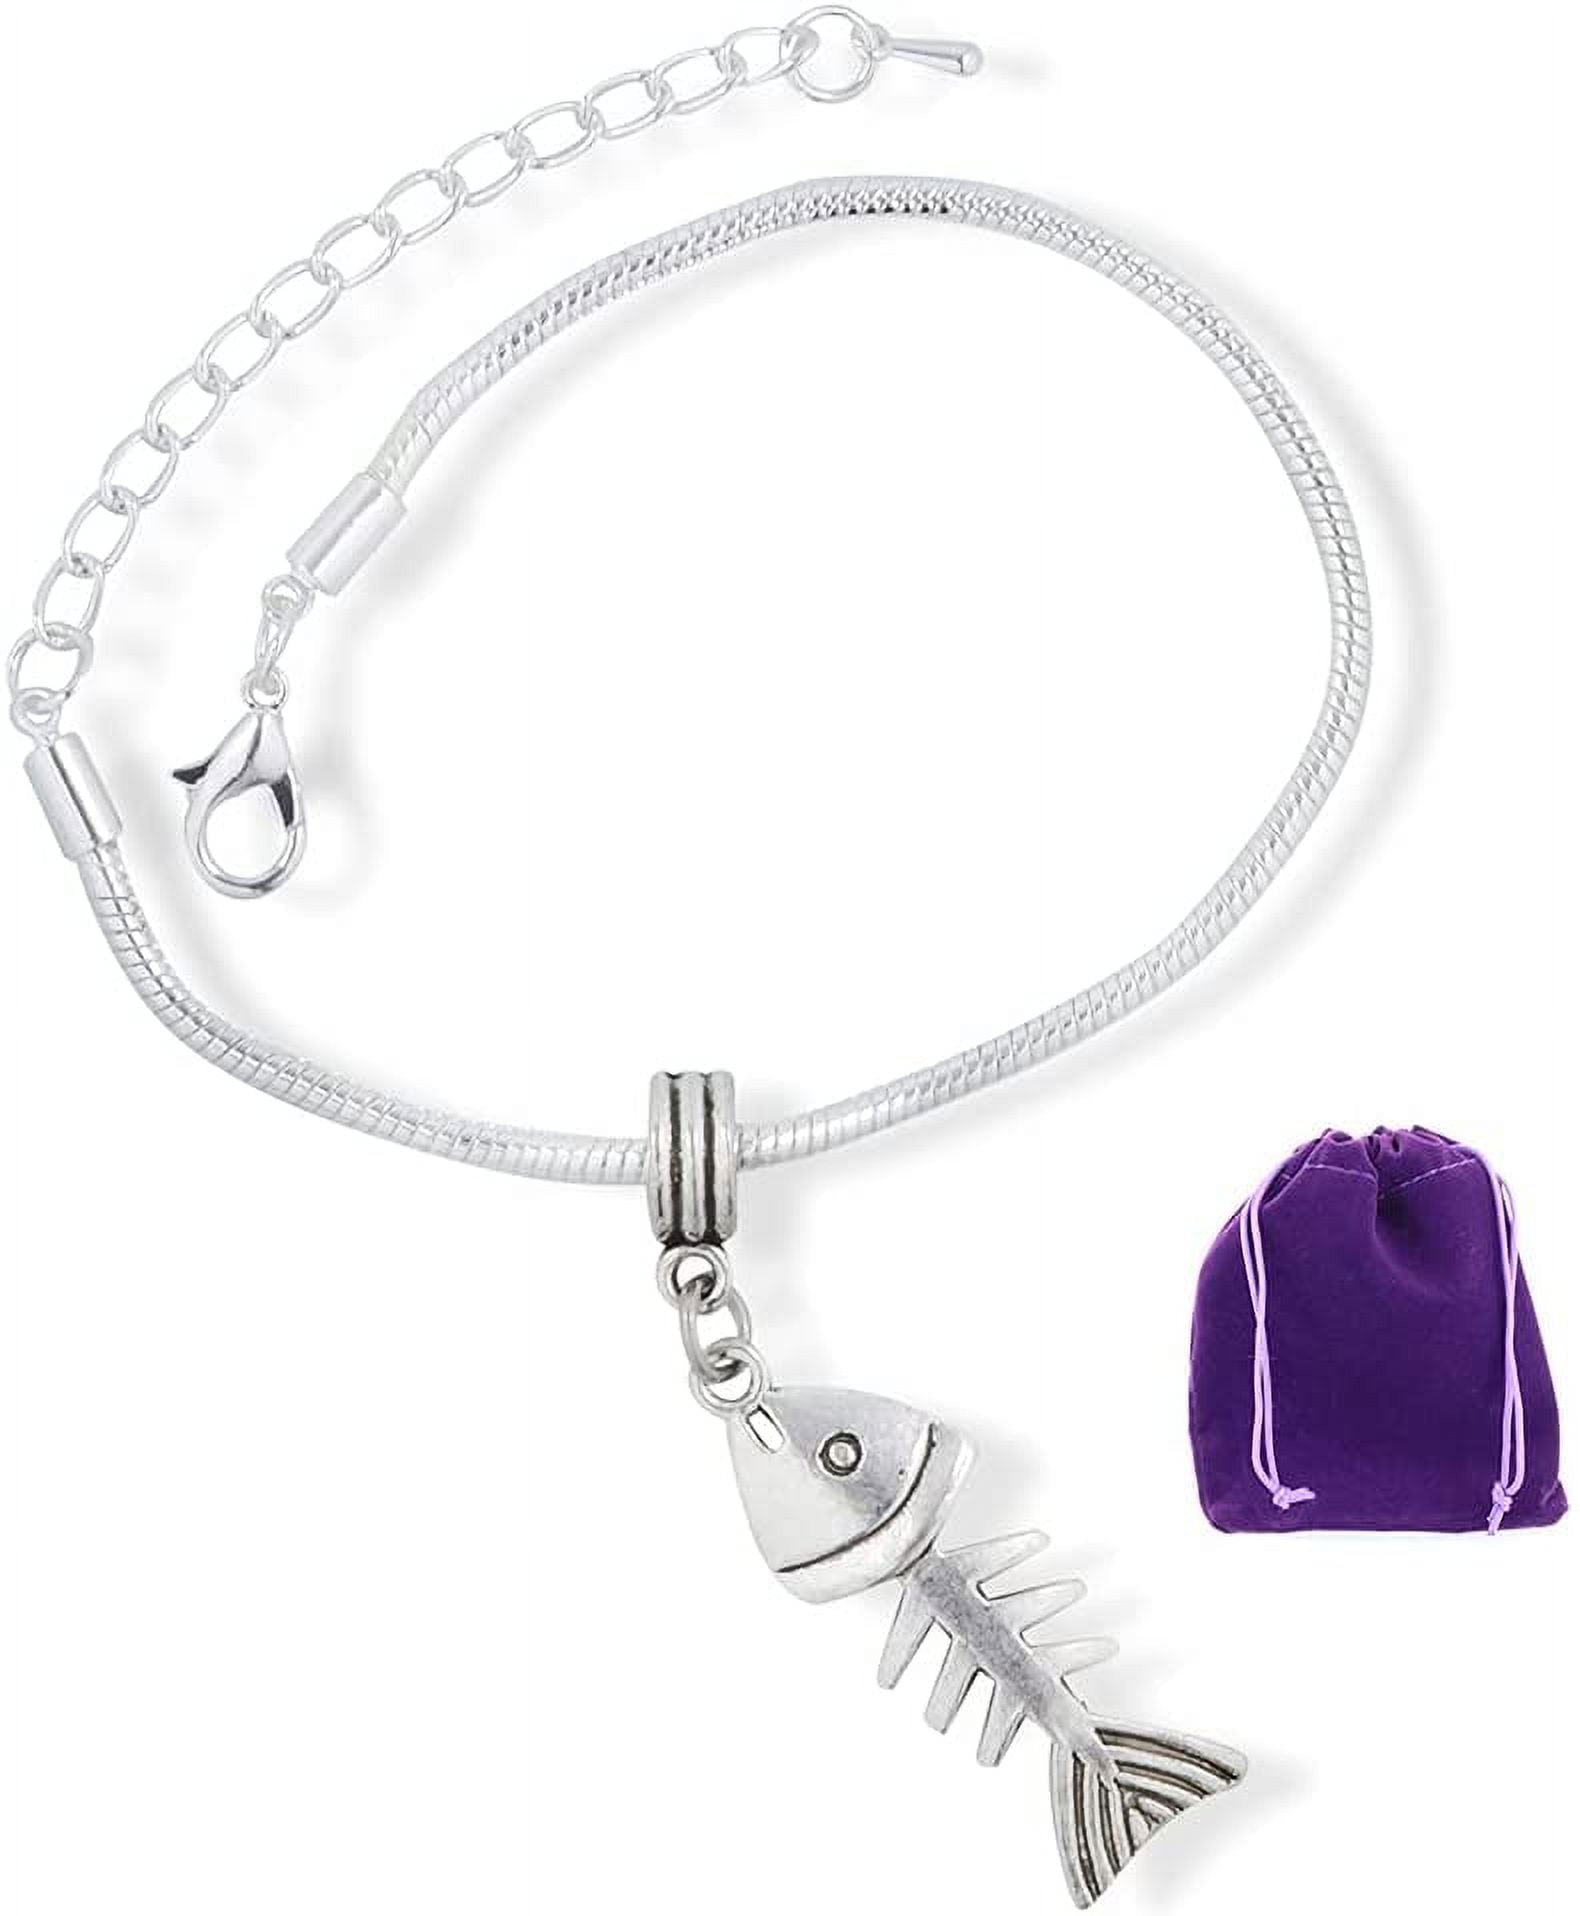 Hook Charm Bracelet 